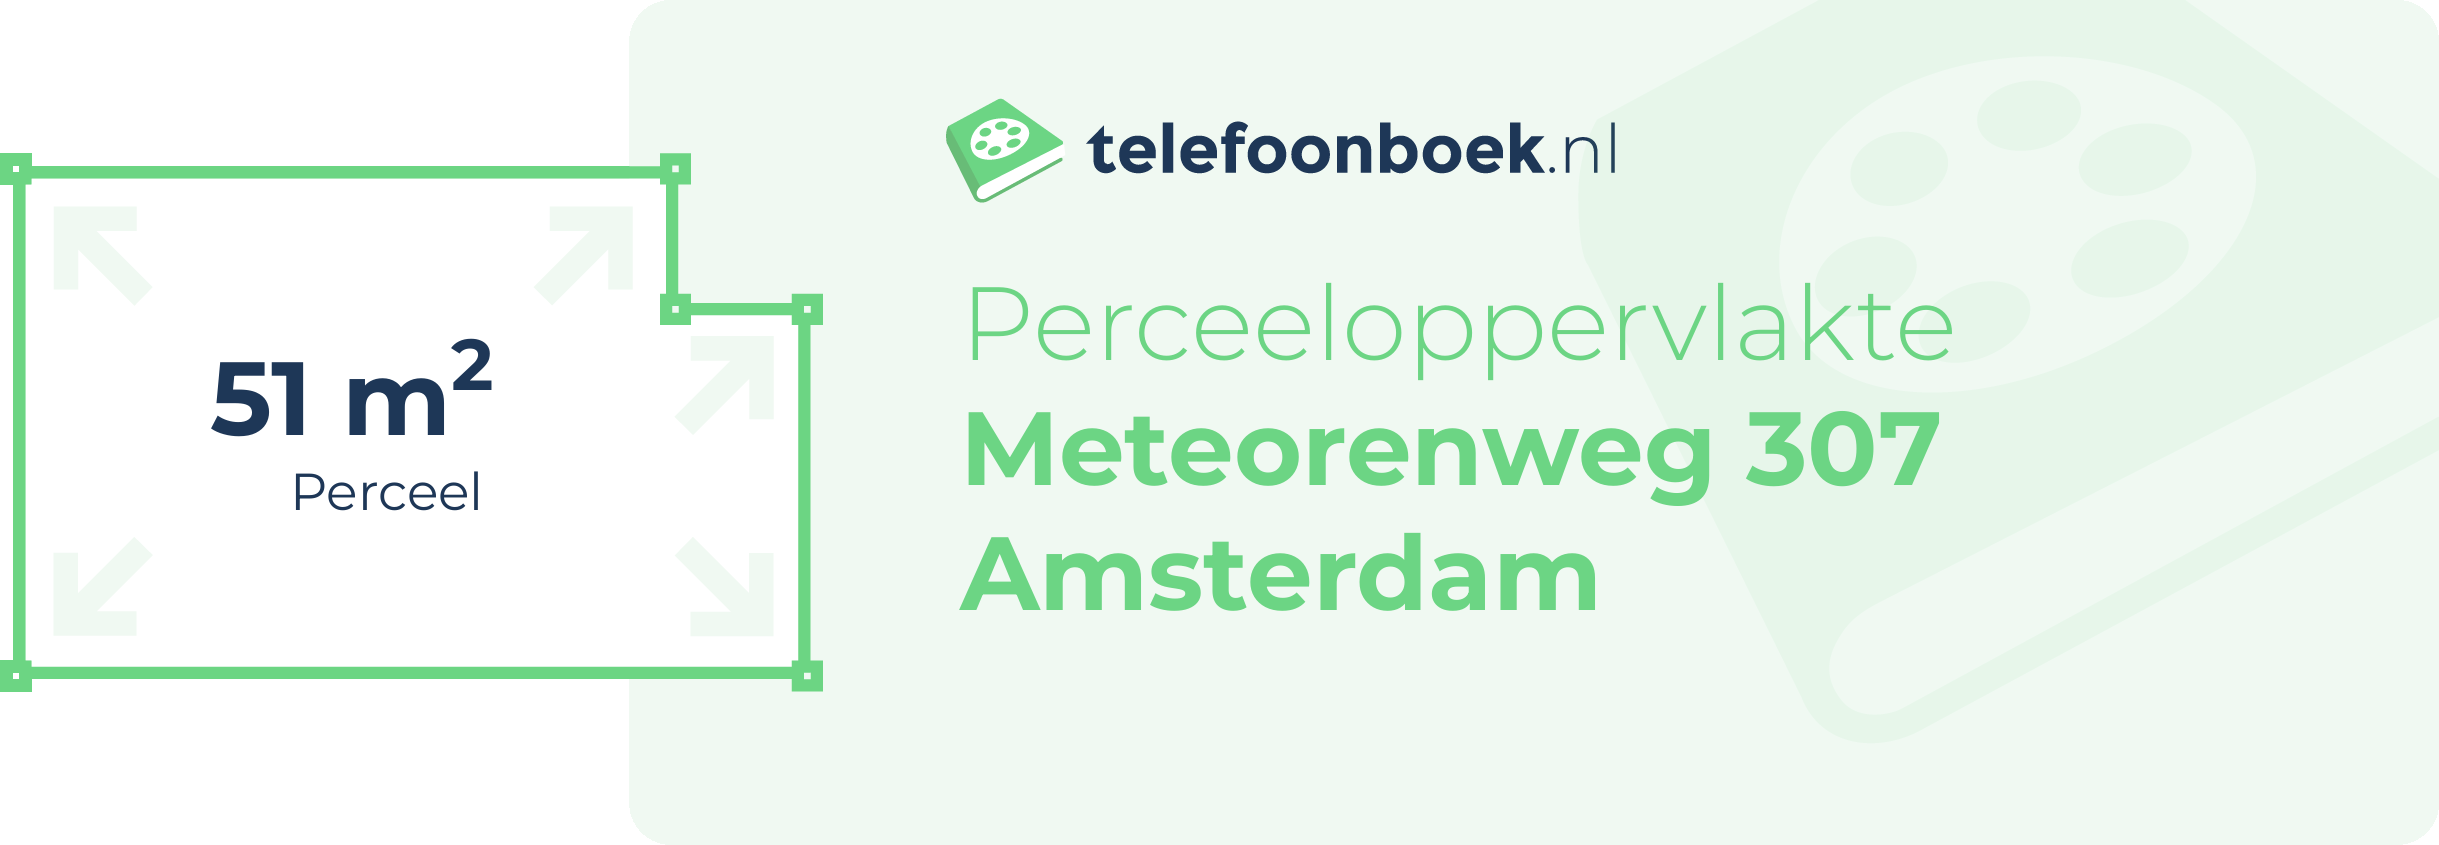 Perceeloppervlakte Meteorenweg 307 Amsterdam